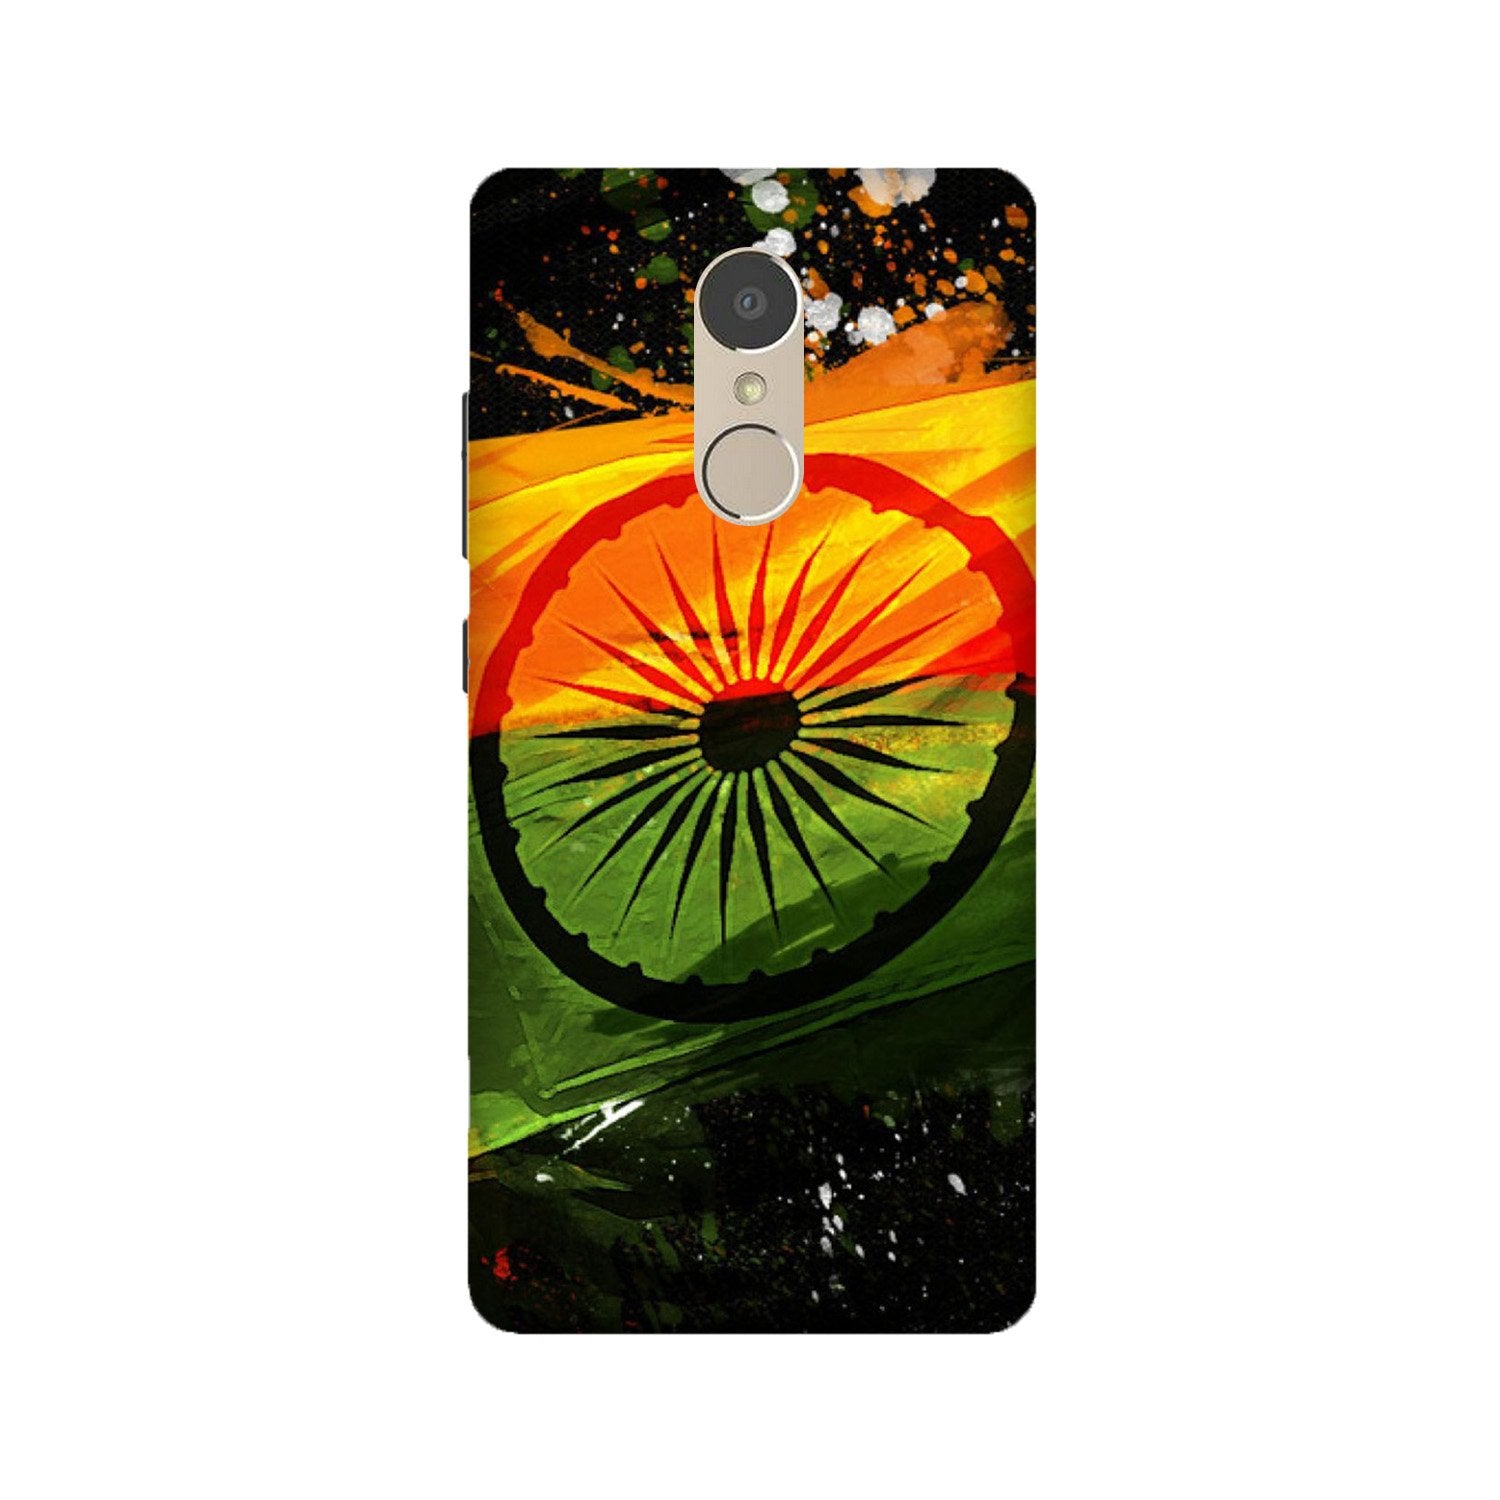 Indian Flag Case for Lenovo K6 Note(Design - 137)